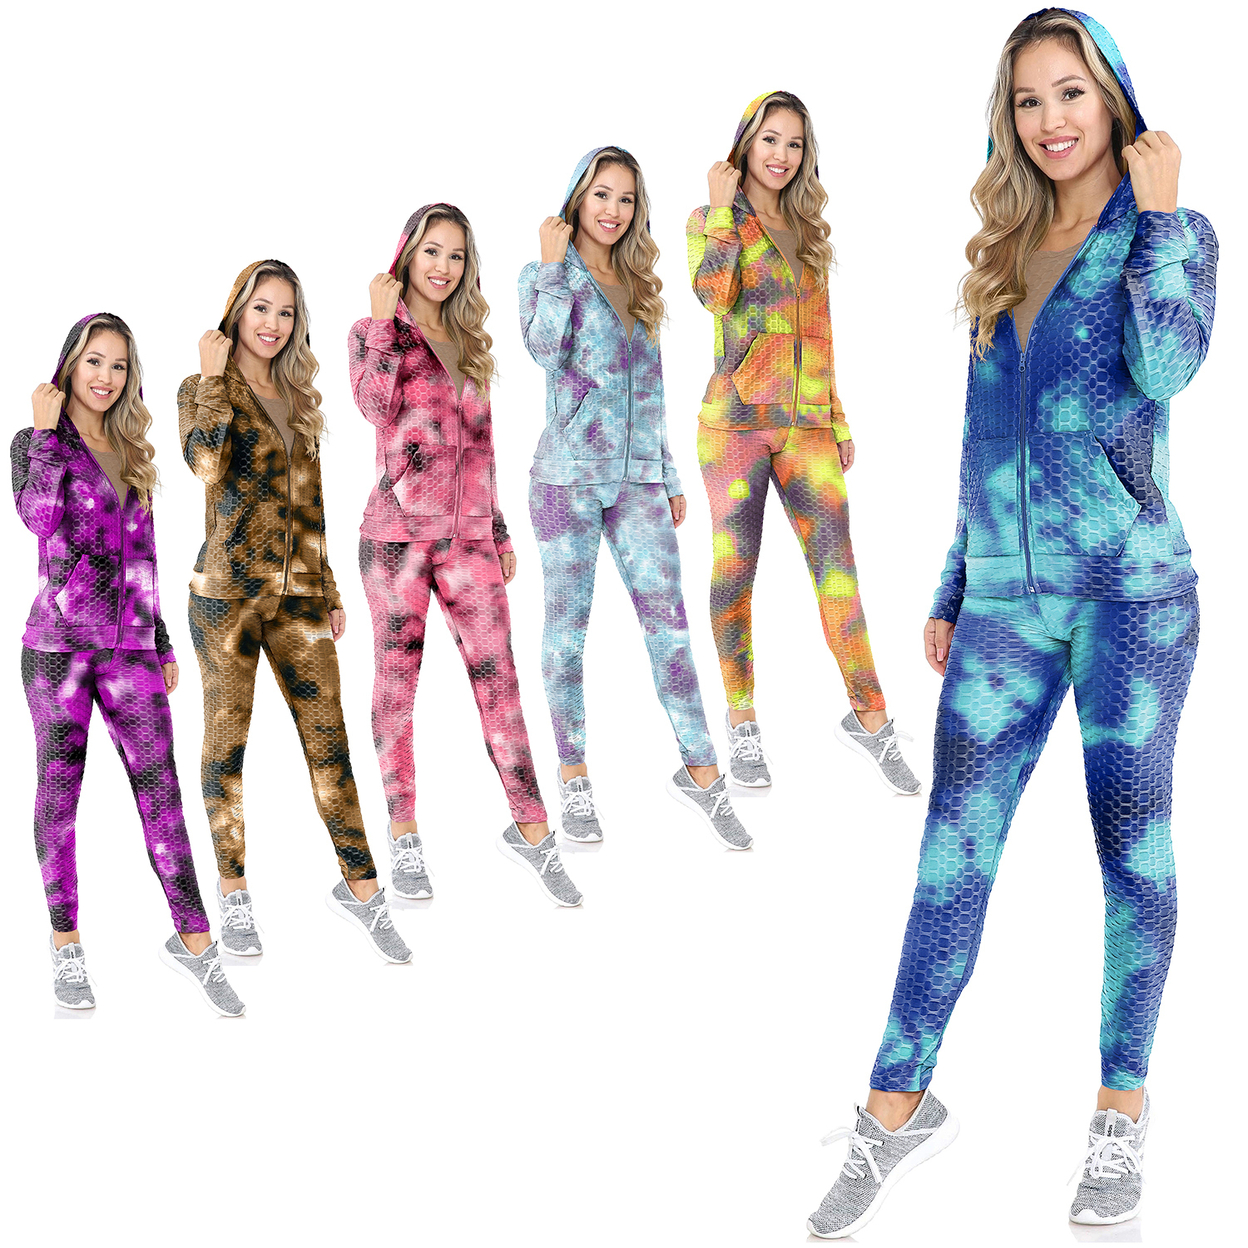 2-Set: Women's Athletic Anti-Cellulite Textured Tie Dye Body Contour Yoga Track Suit W/ Hood - X-large, Solid